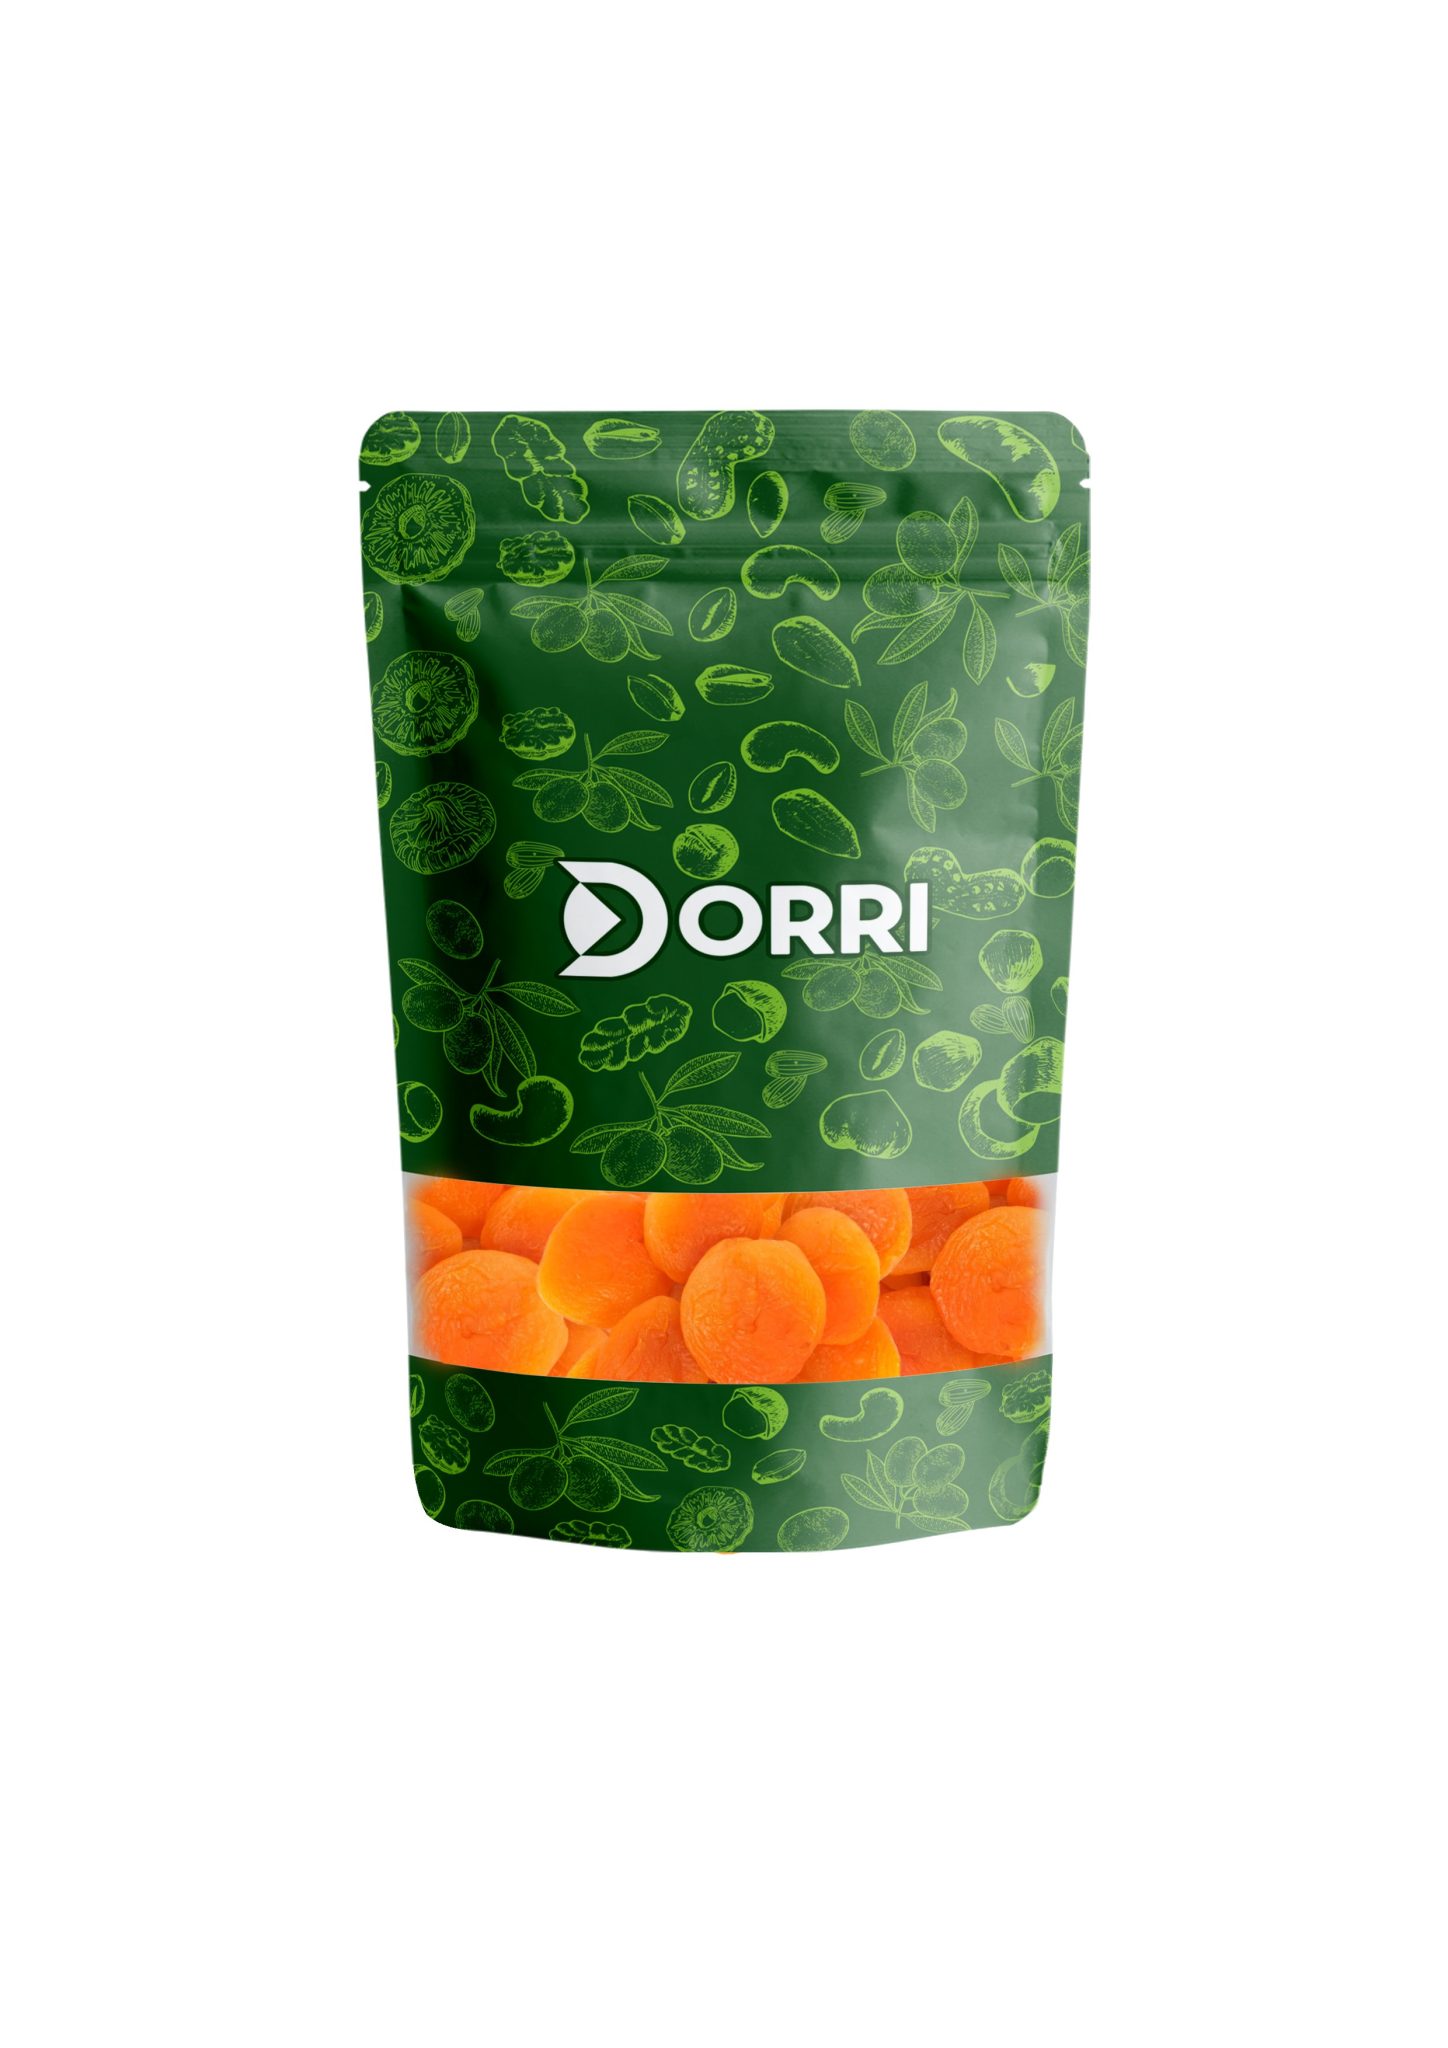 Dried Apricot | Dorri